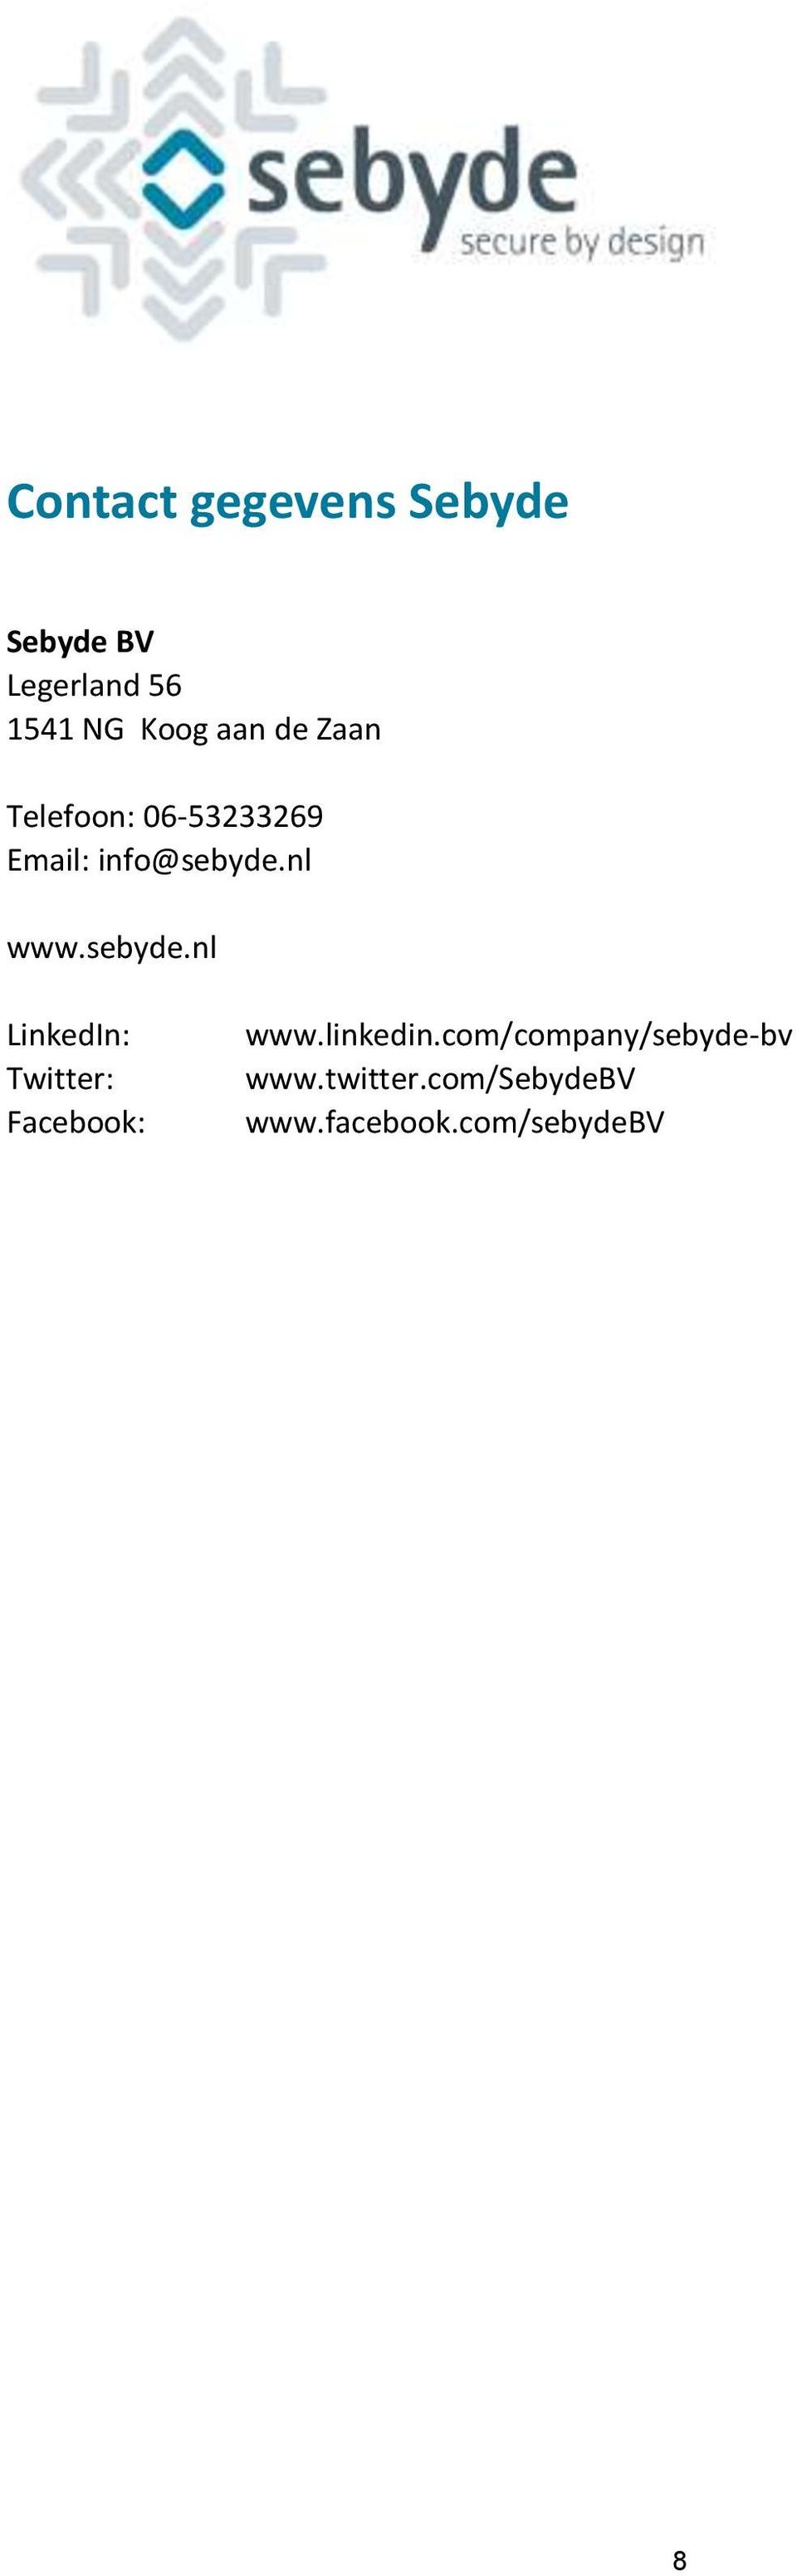 sebyde.nl LinkedIn: Twitter: Facebook: www.linkedin.